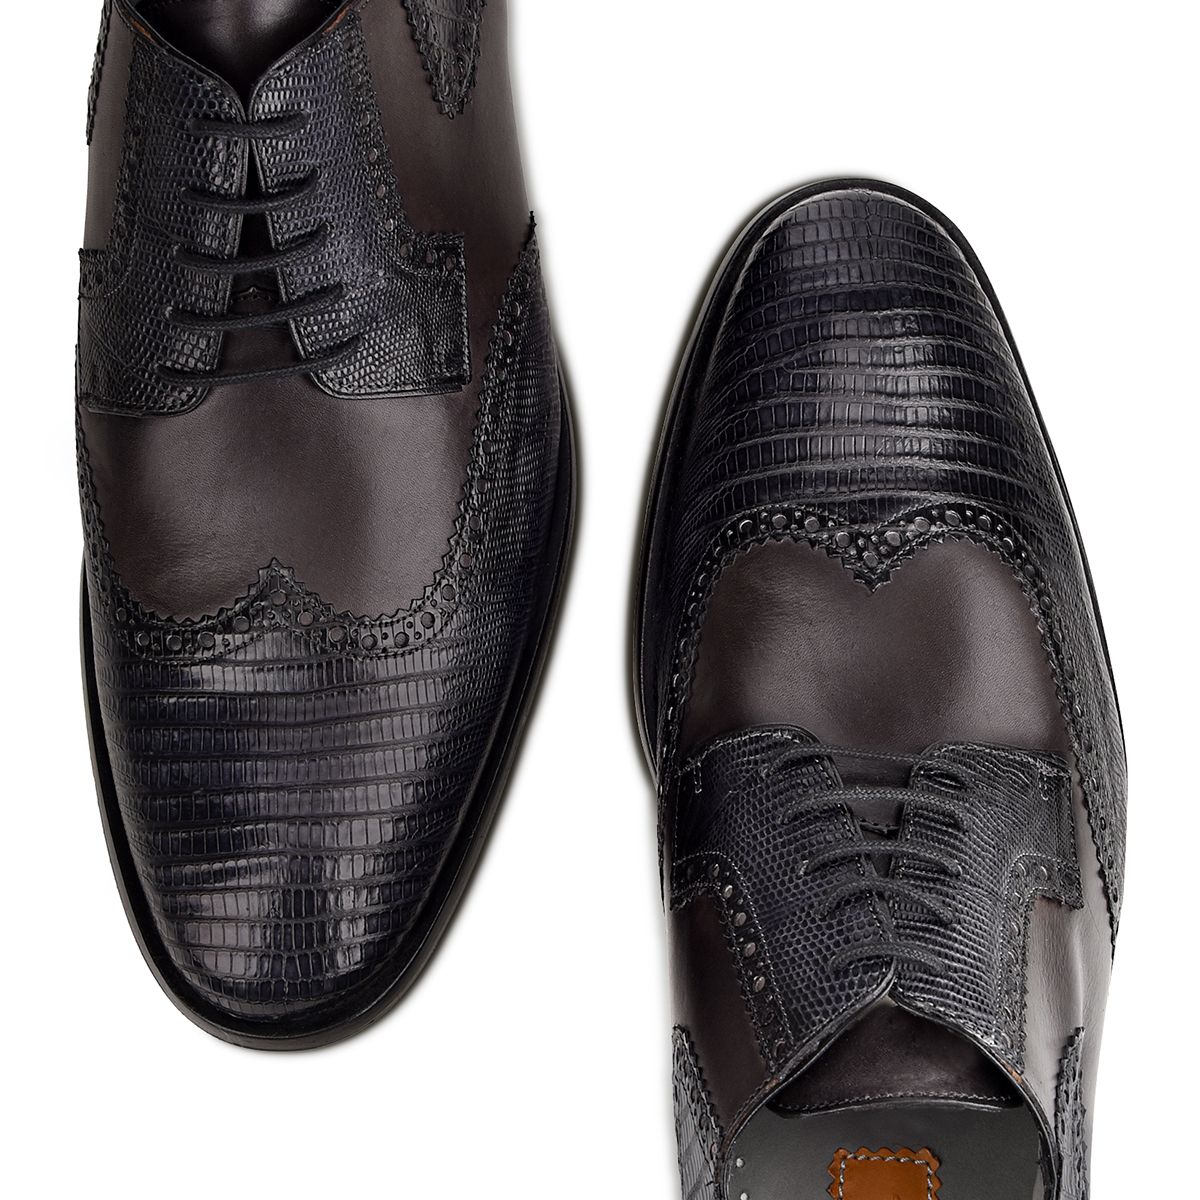 23NLTBV - Cuadra gray fashion dress lizard wing tip derby shoes for men-Kuet.us